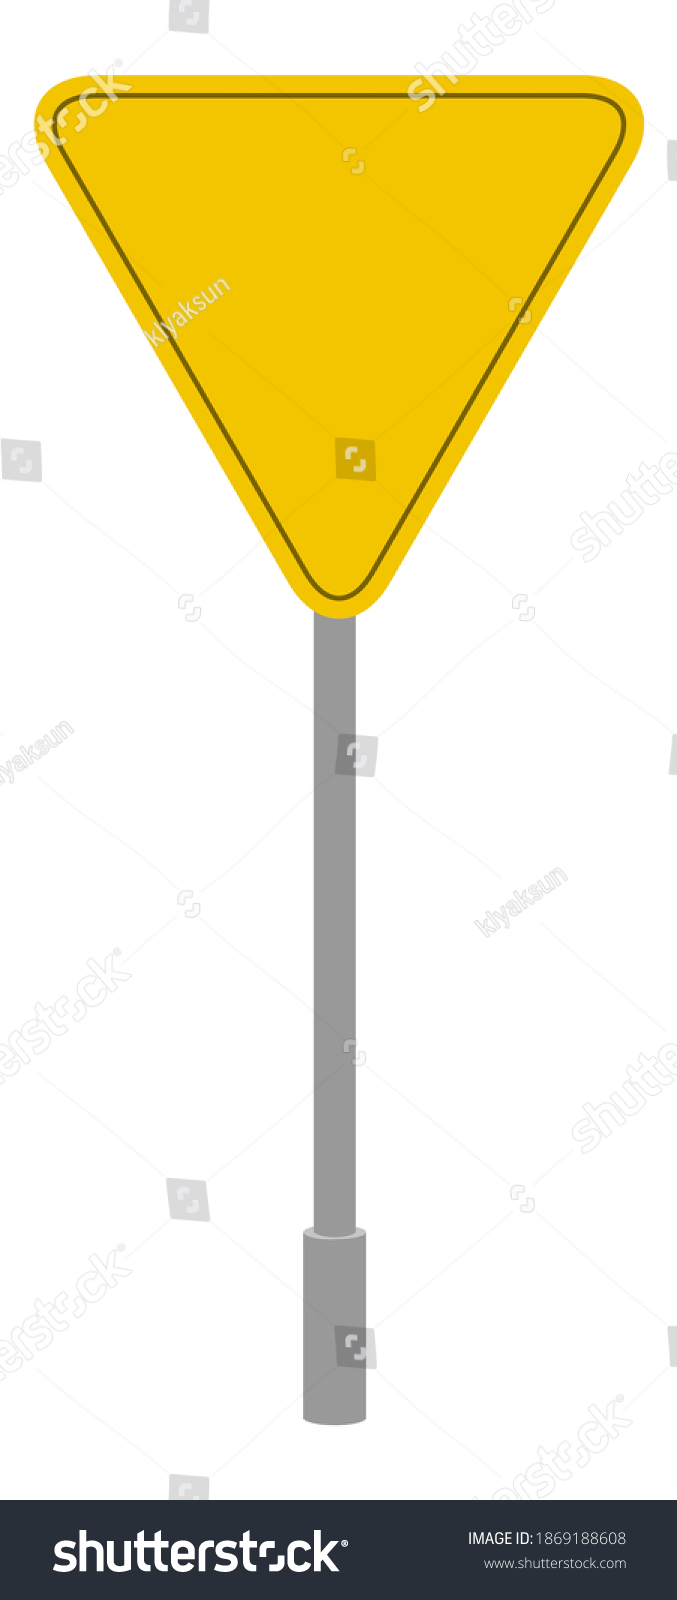 Yellow Road Sign Geometric Triangular Shape Royalty Free Stock